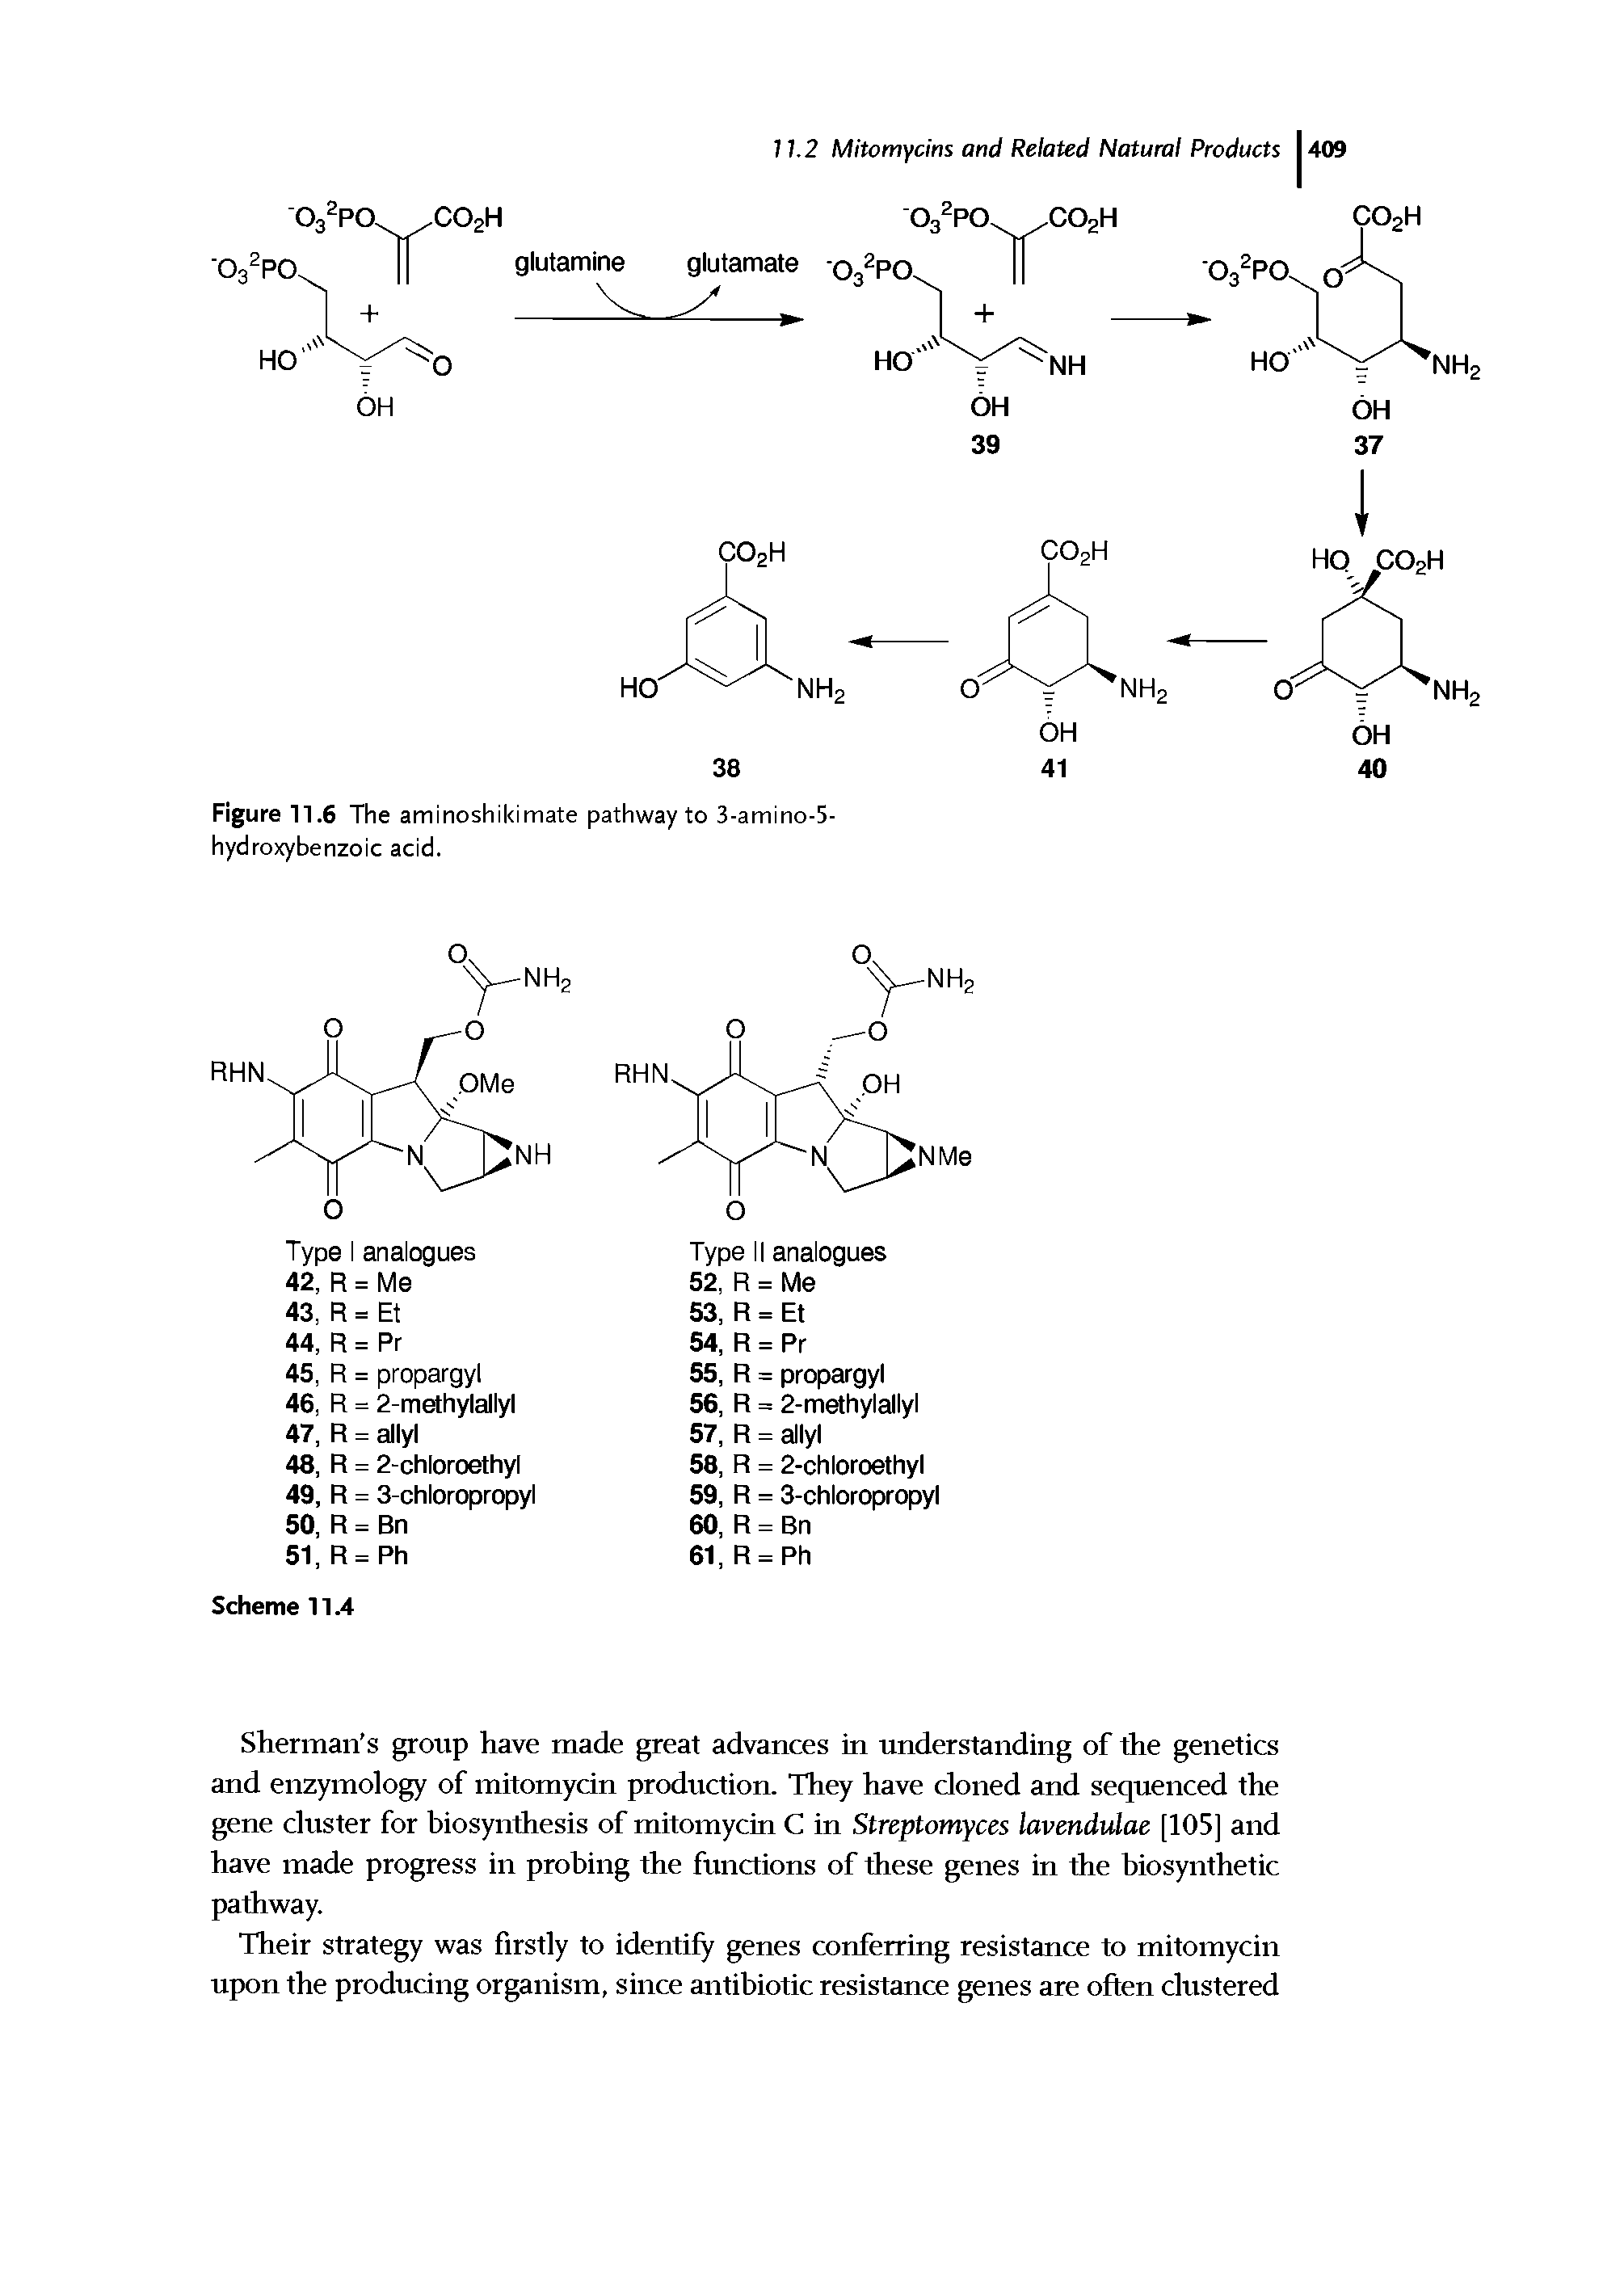 Figure 11.6 The aminoshikimate pathway to 3-amino-5-hydroxybenzoic acid.